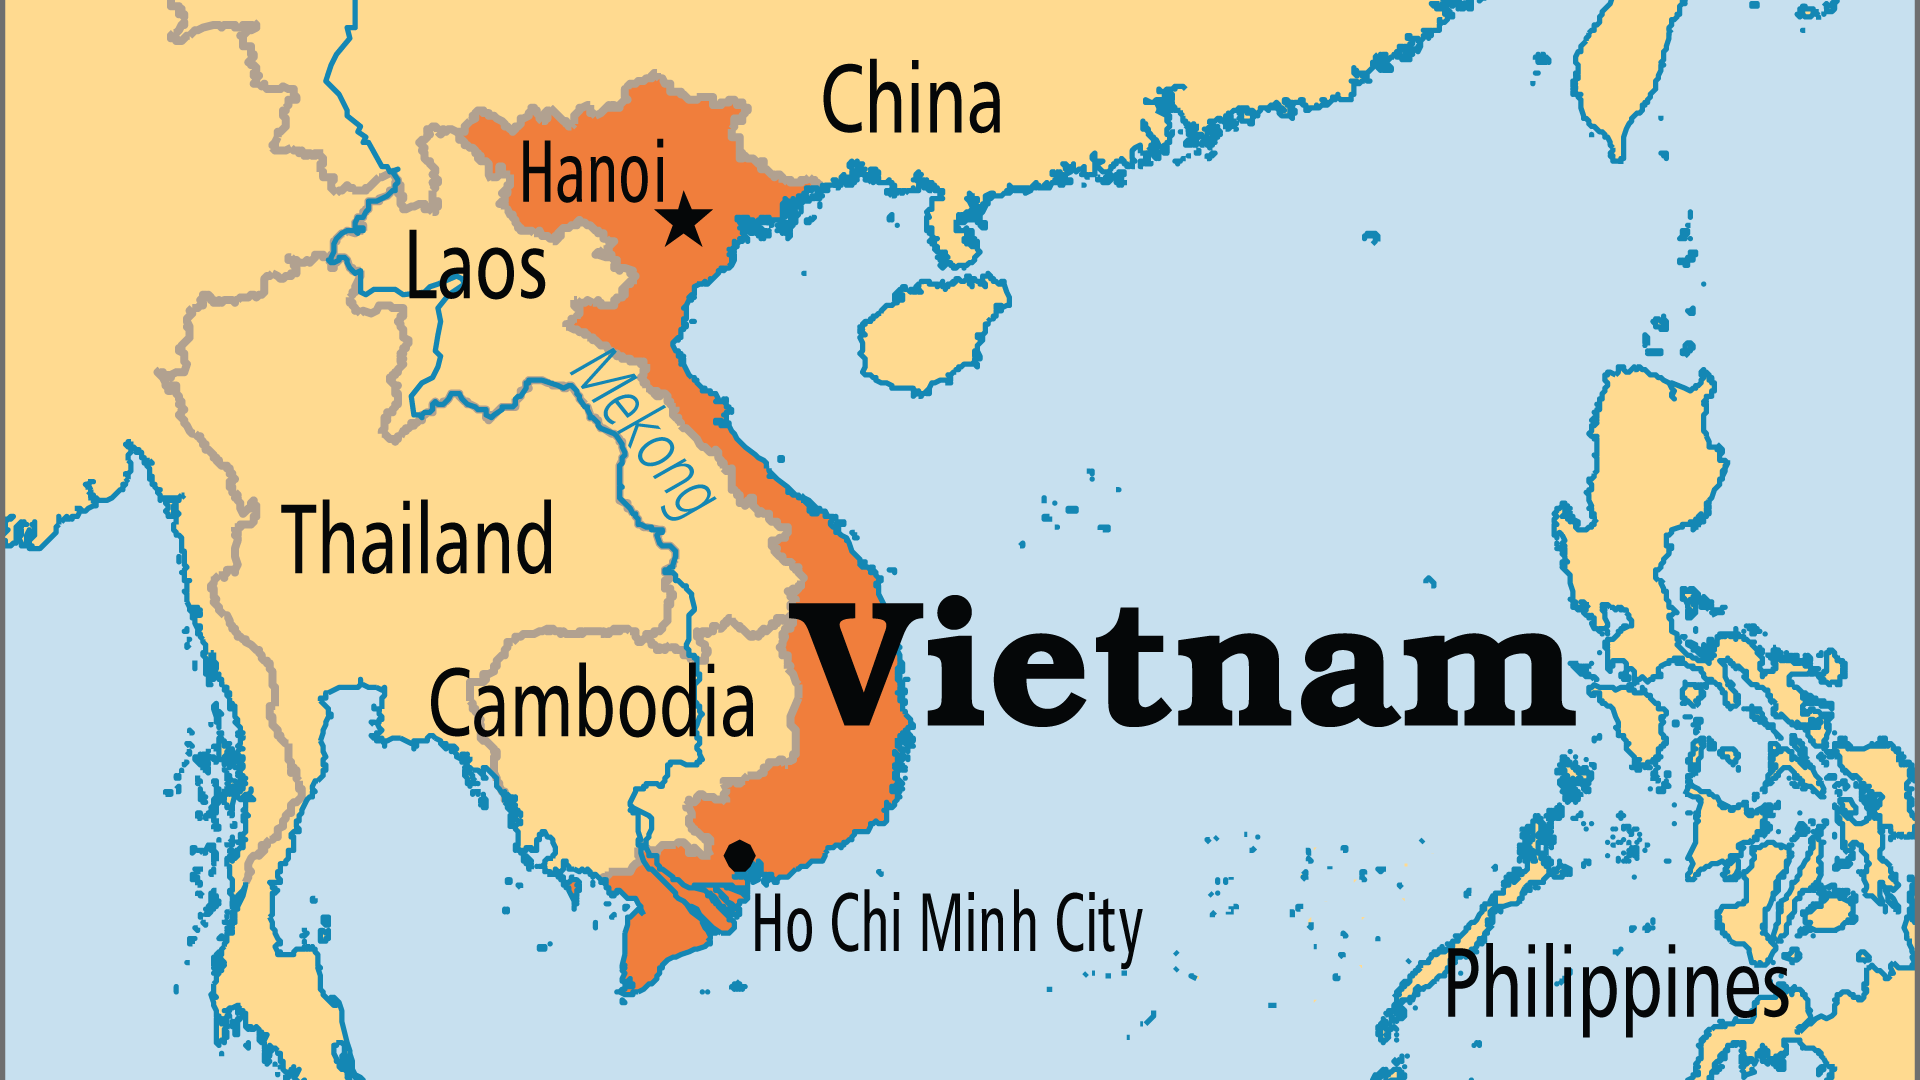 Vietnam (Operation World)